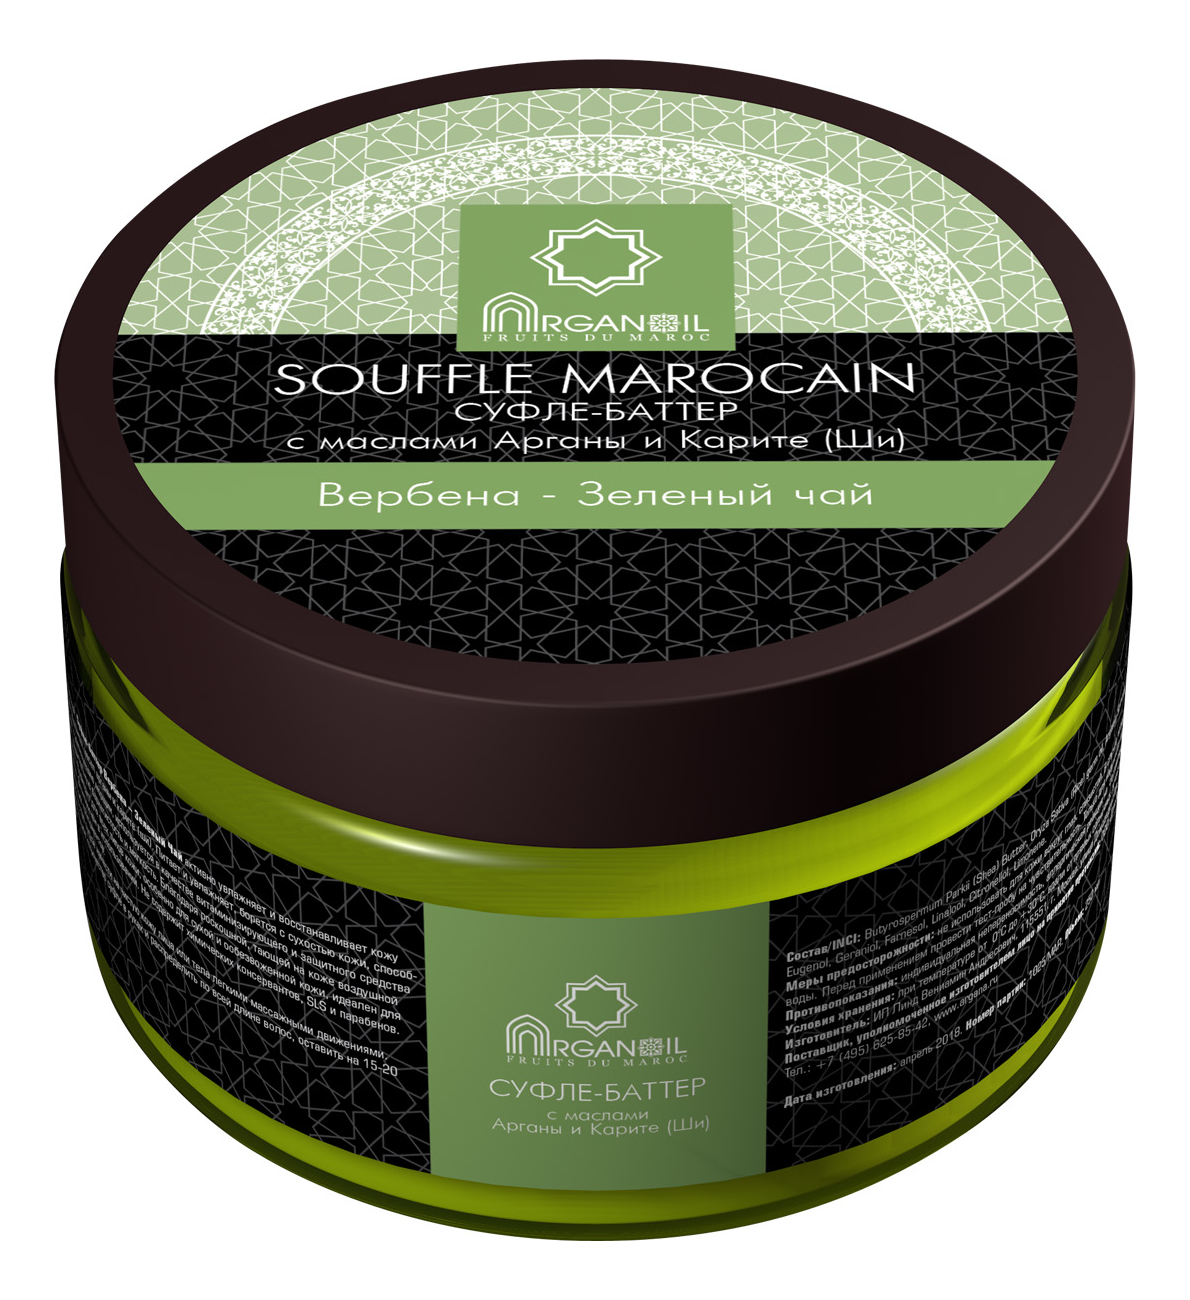 Суфле-баттер для тела с маслом арганы и карите Souffle Marocain (вербена-зеленый чай): Суфле-баттер 250мл от Randewoo